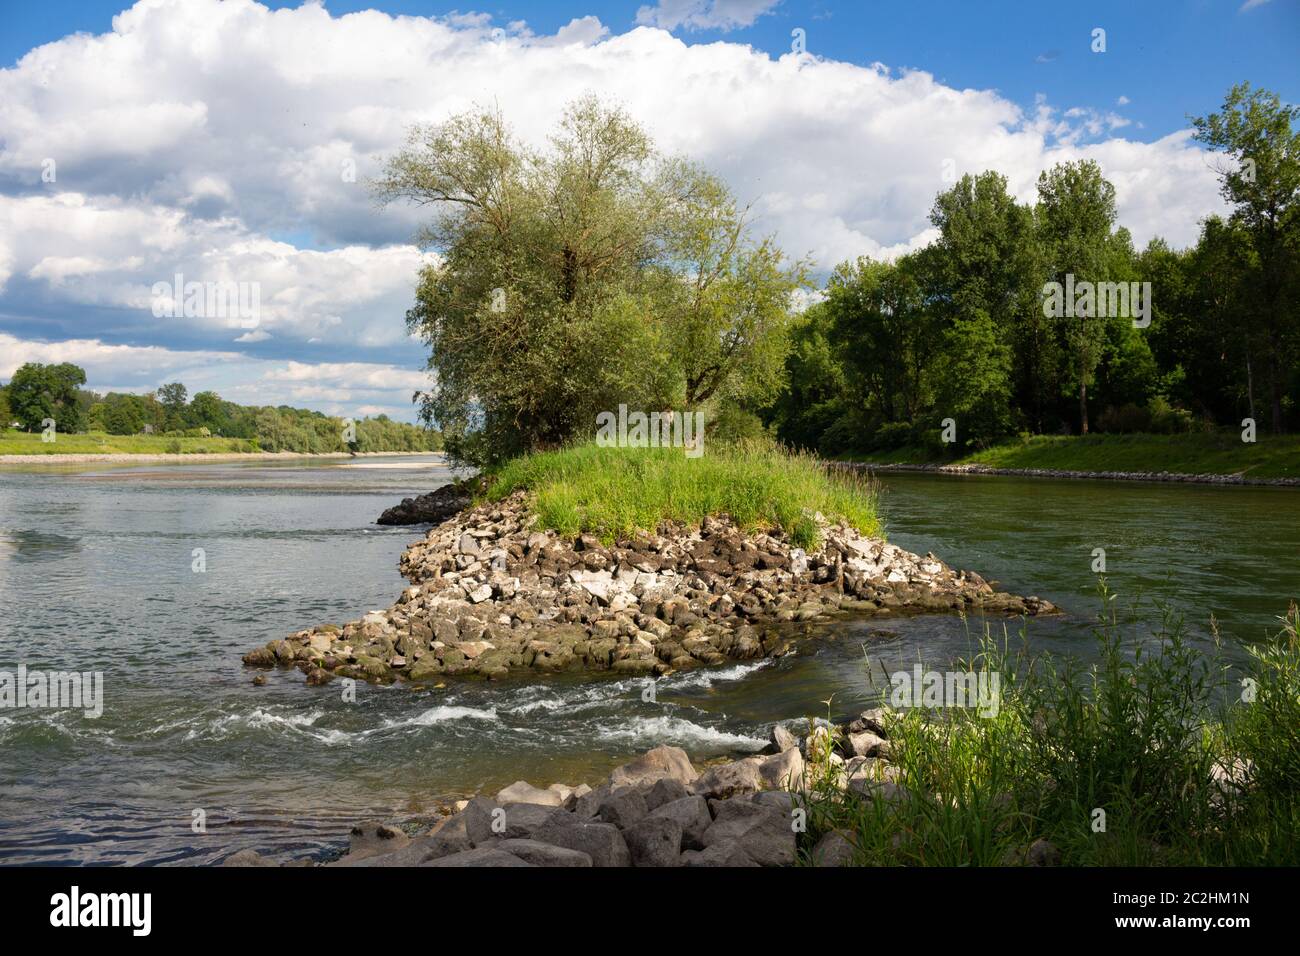 The river estuary of the 'Isar' into the 'Donau' near Deggendorf in Germany Stock Photo